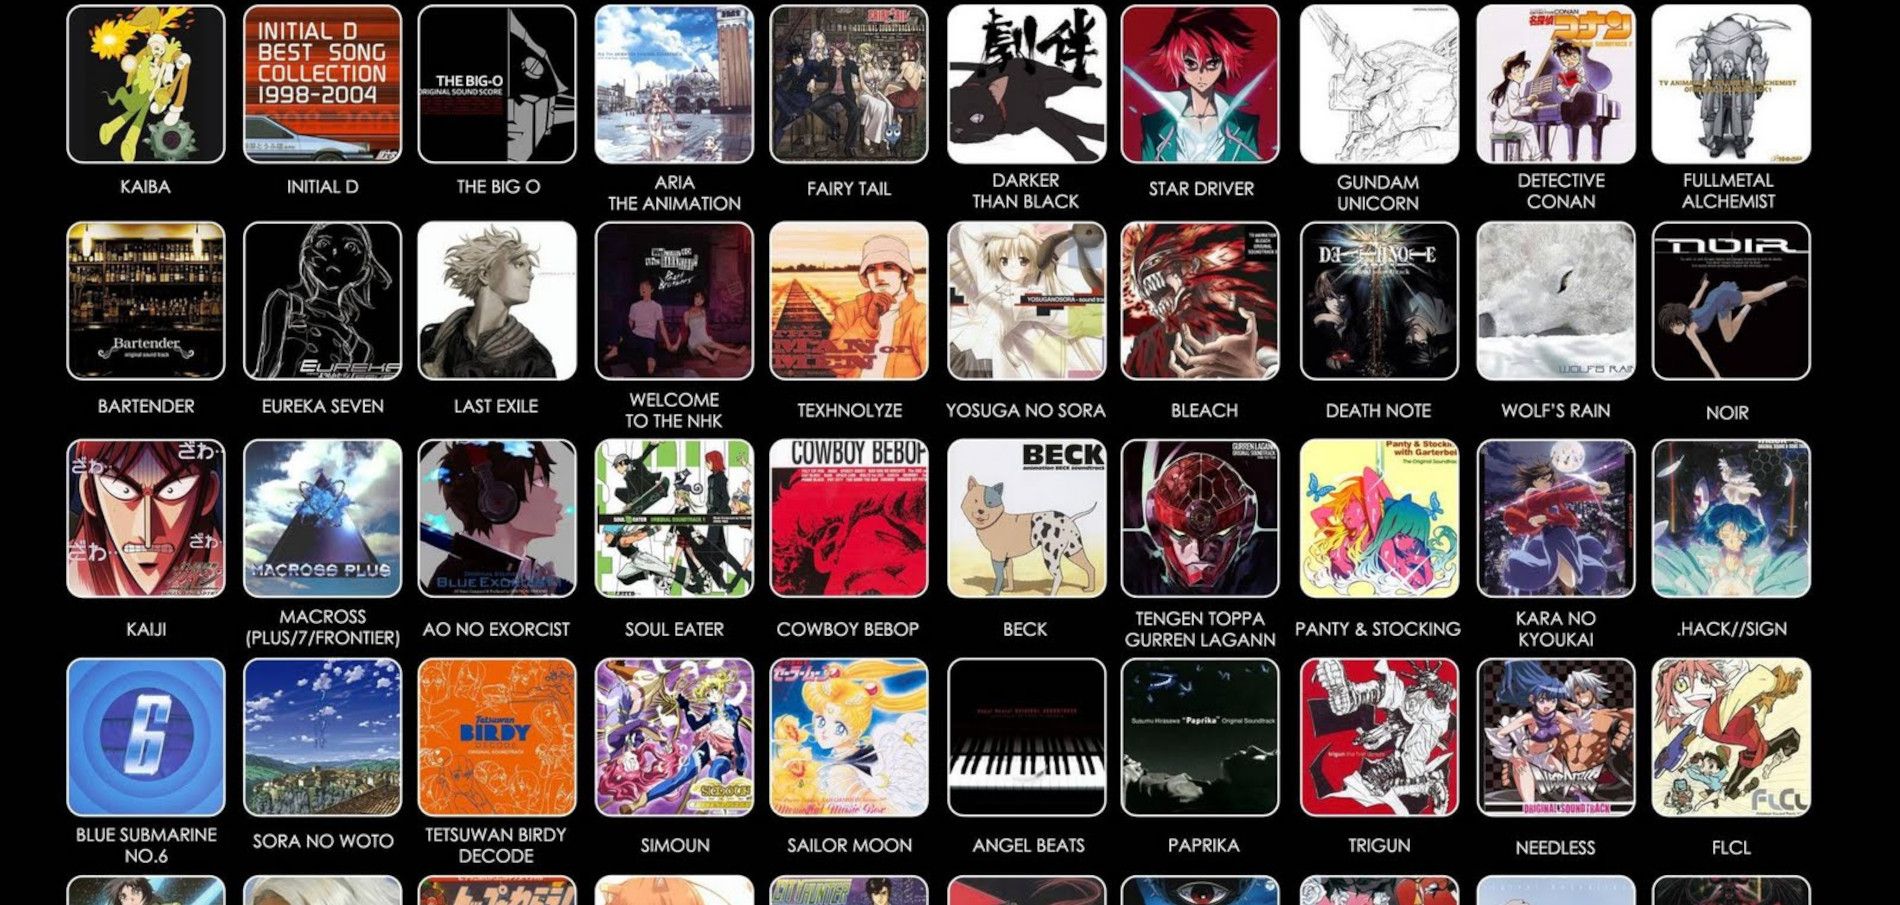 10 greatest anime soundtracks ever written - Classic FM